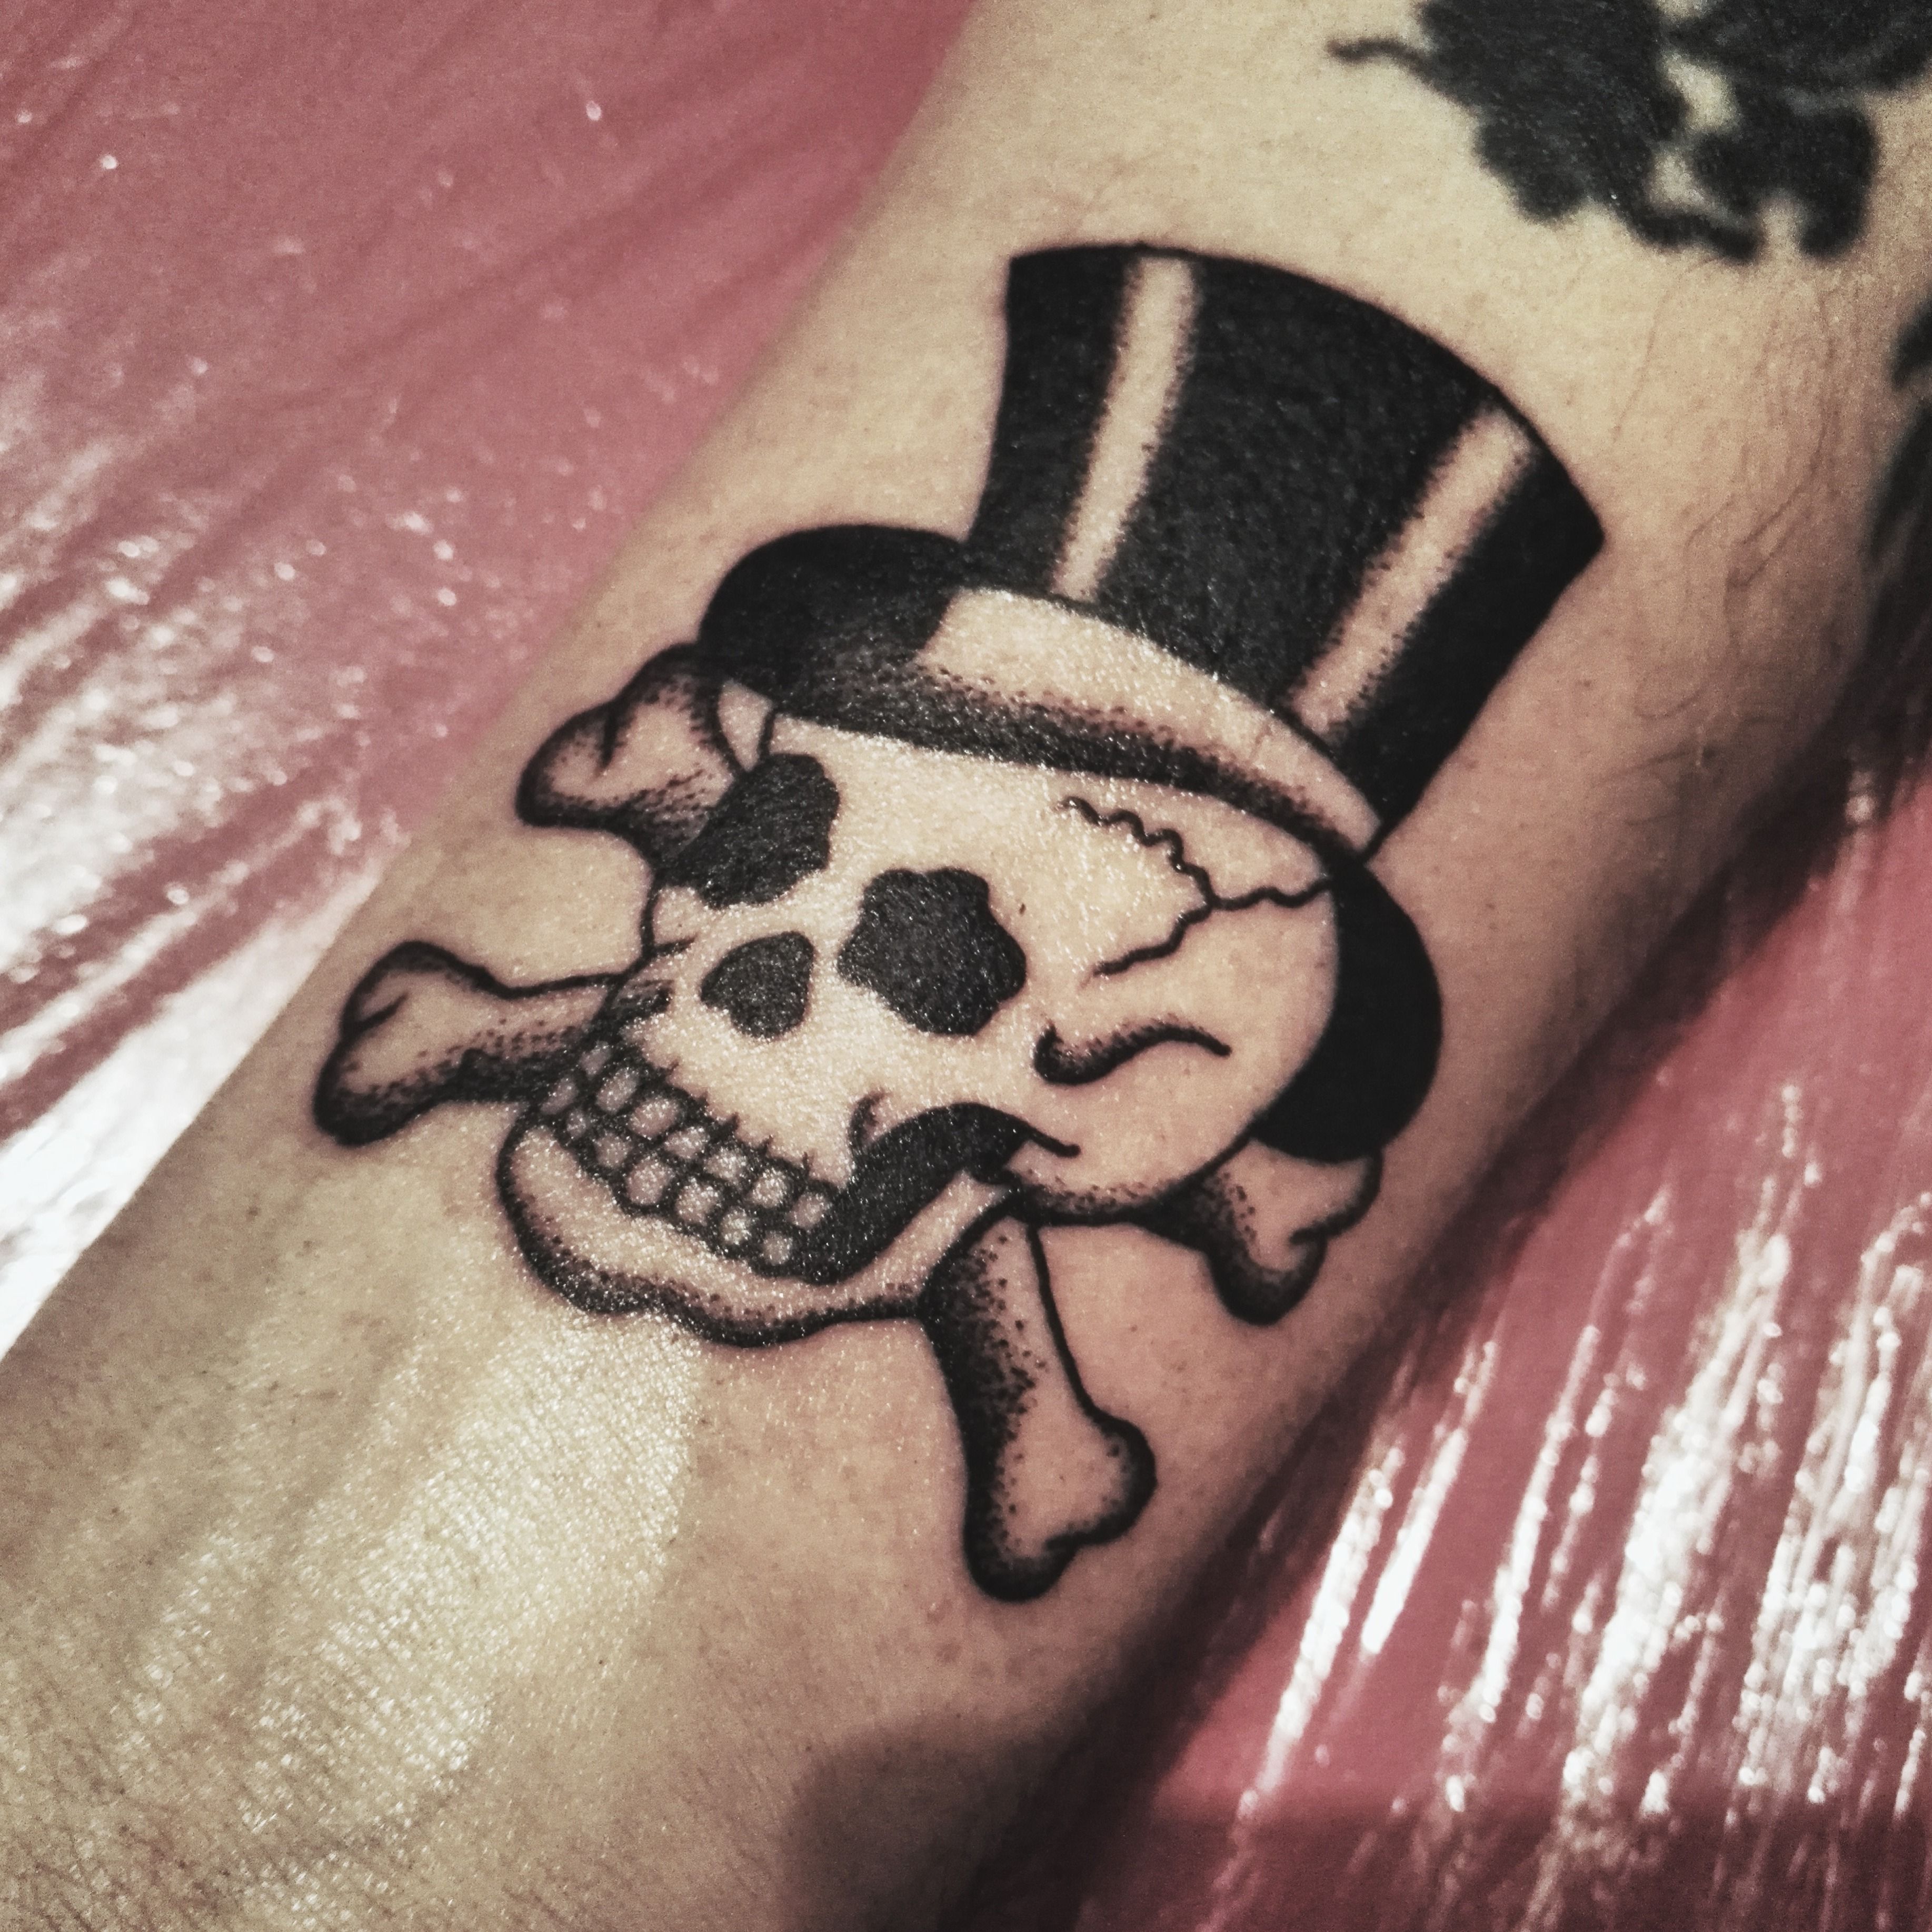 Sailor Skull tattoo by Ata Ink  Post 23182